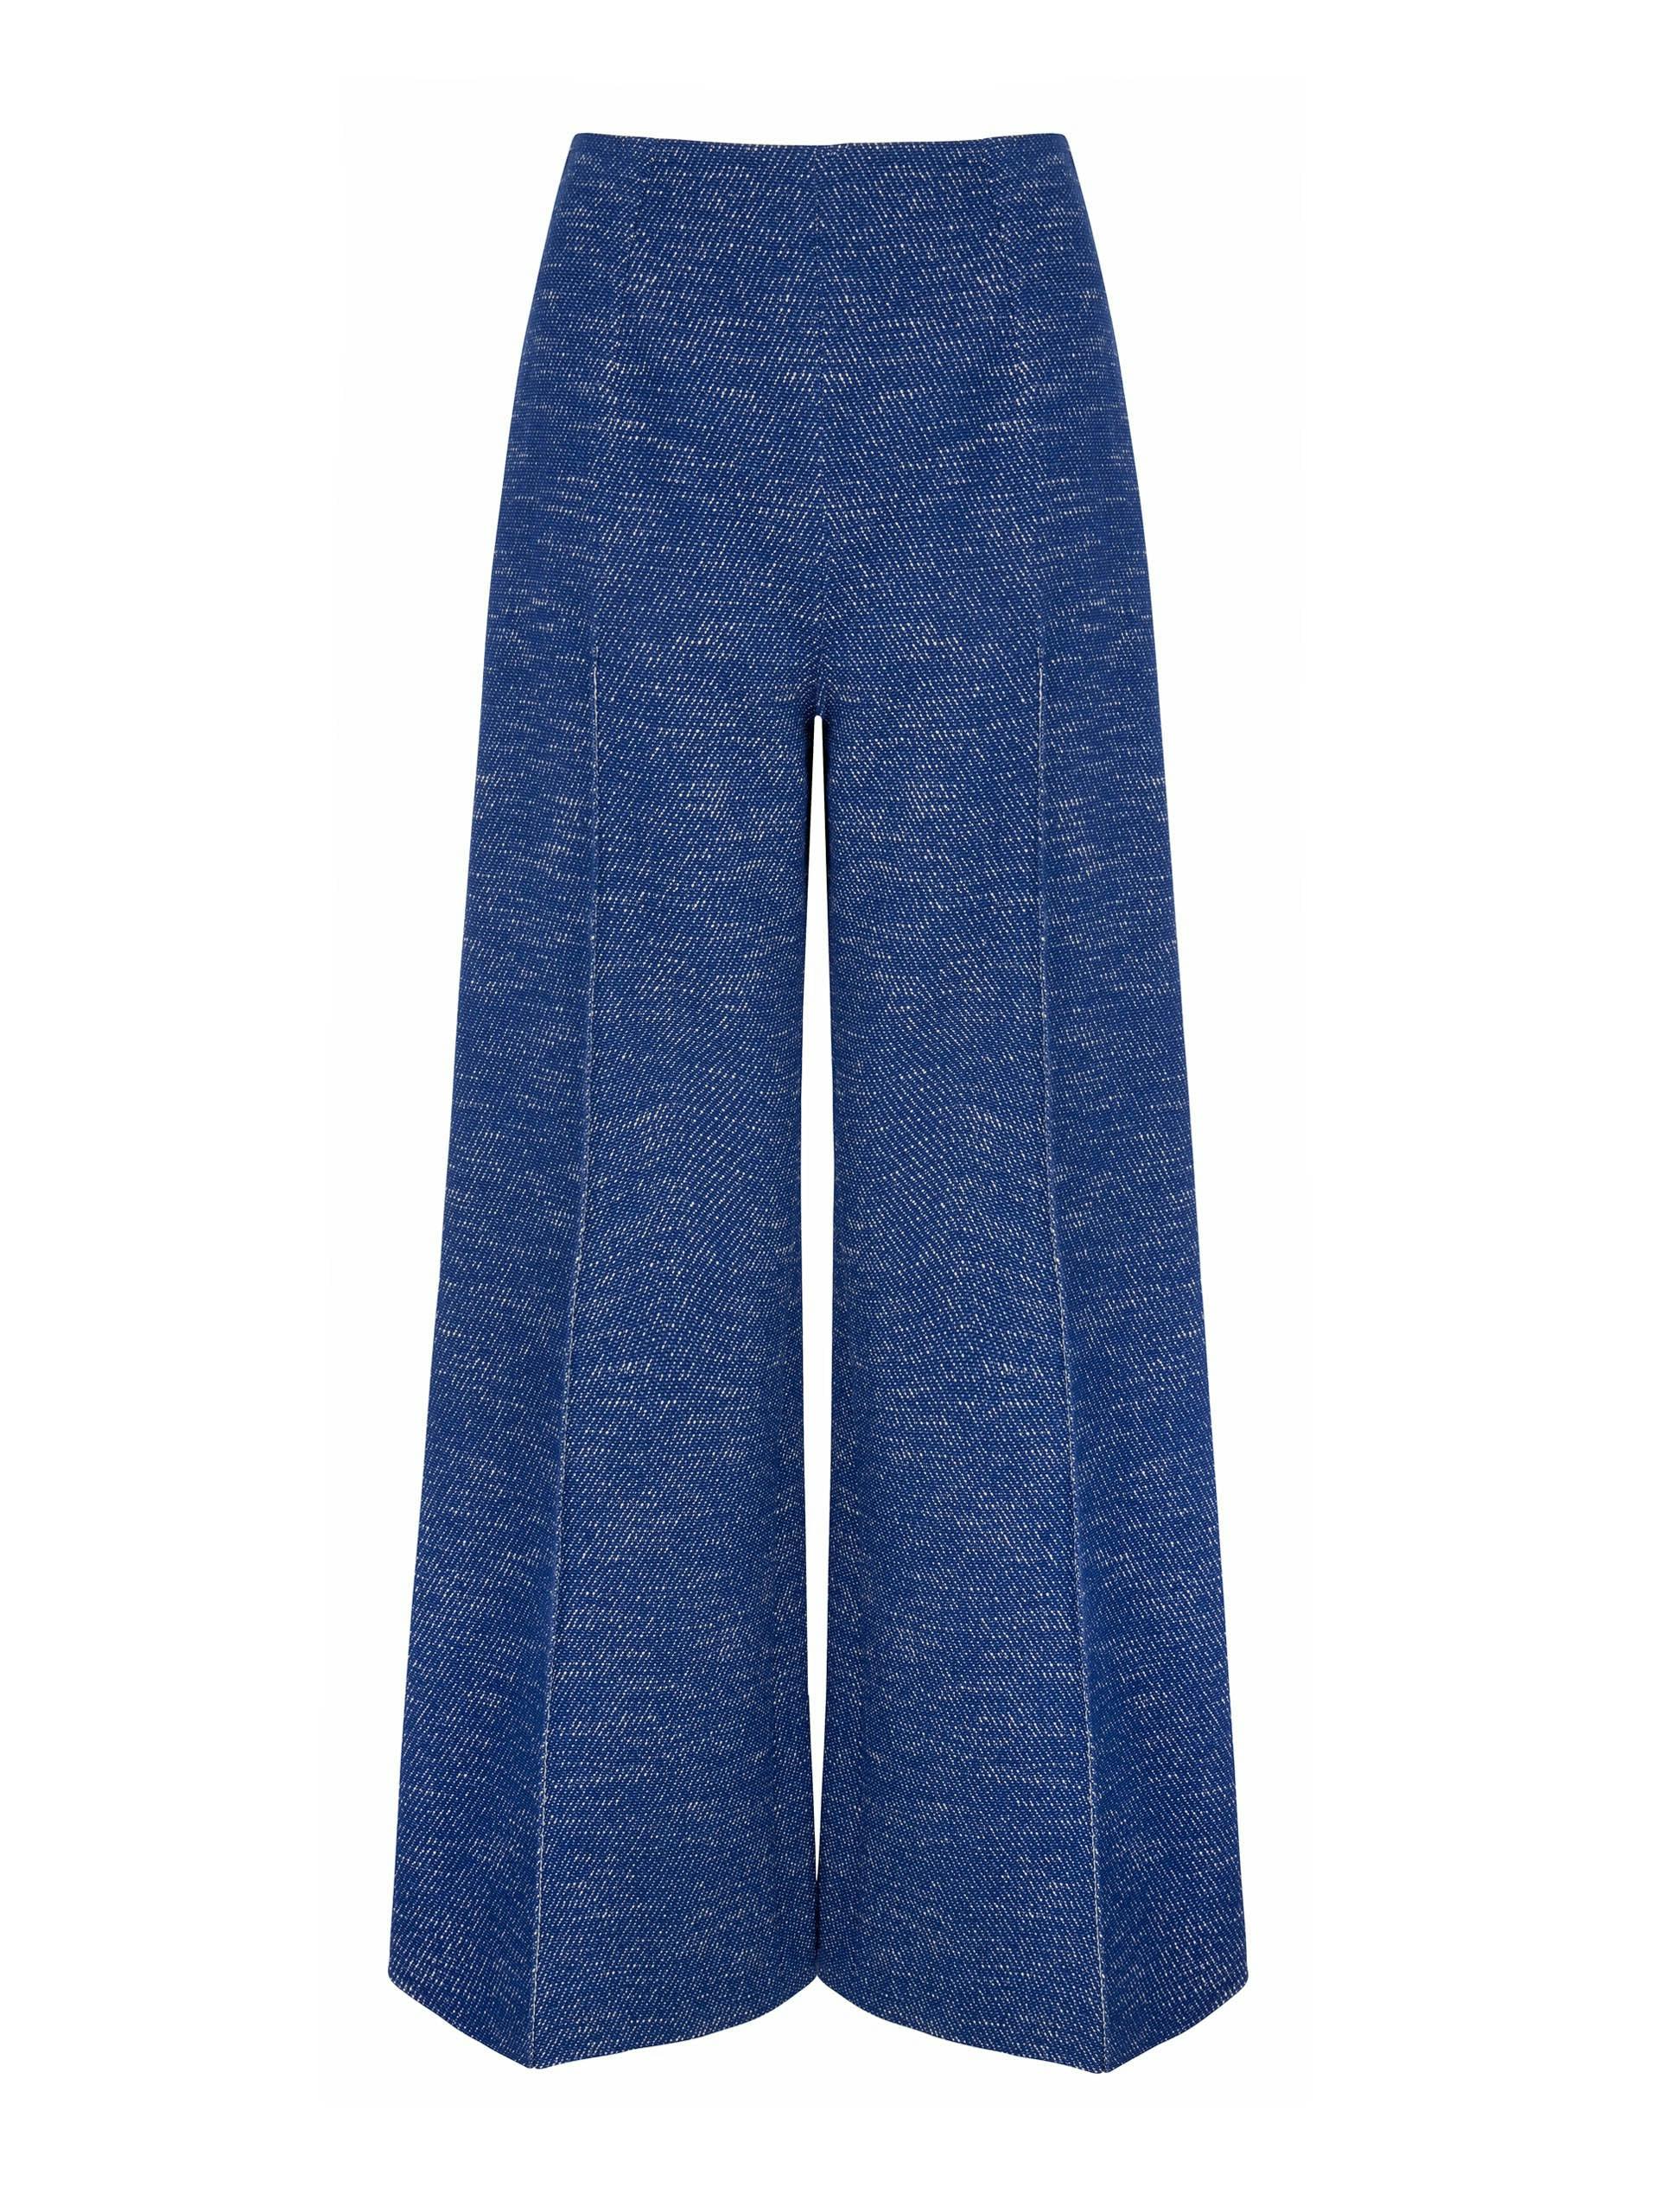 Blue high-rise Daffy trousers